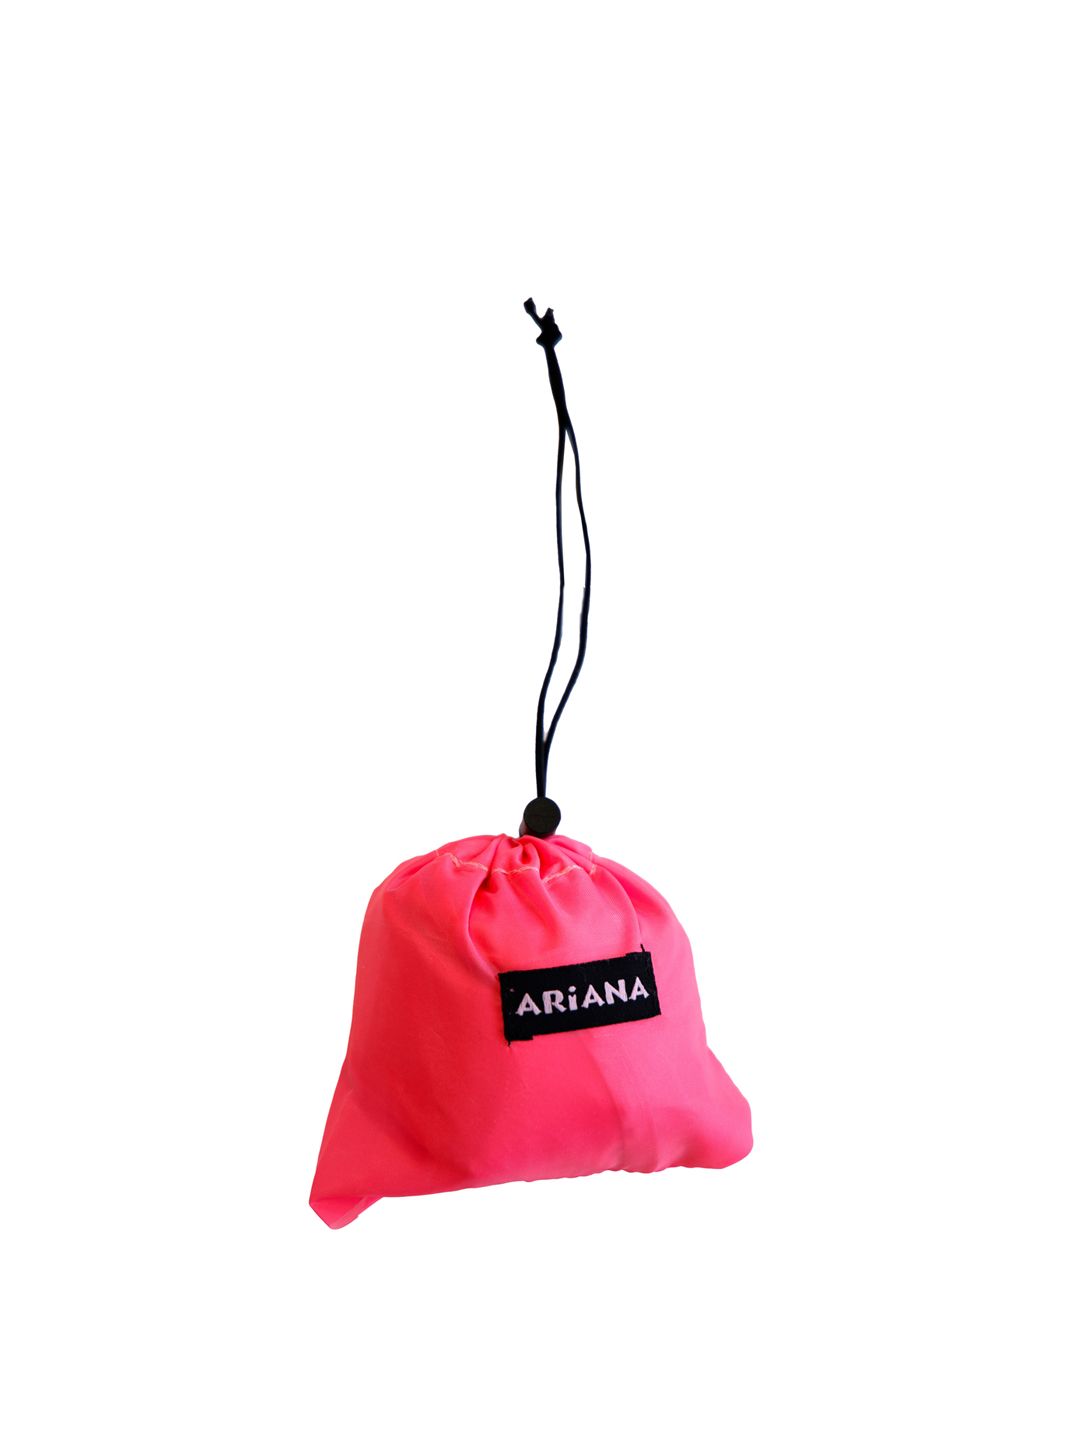 Ariana Pink Shopping Bag Price in India